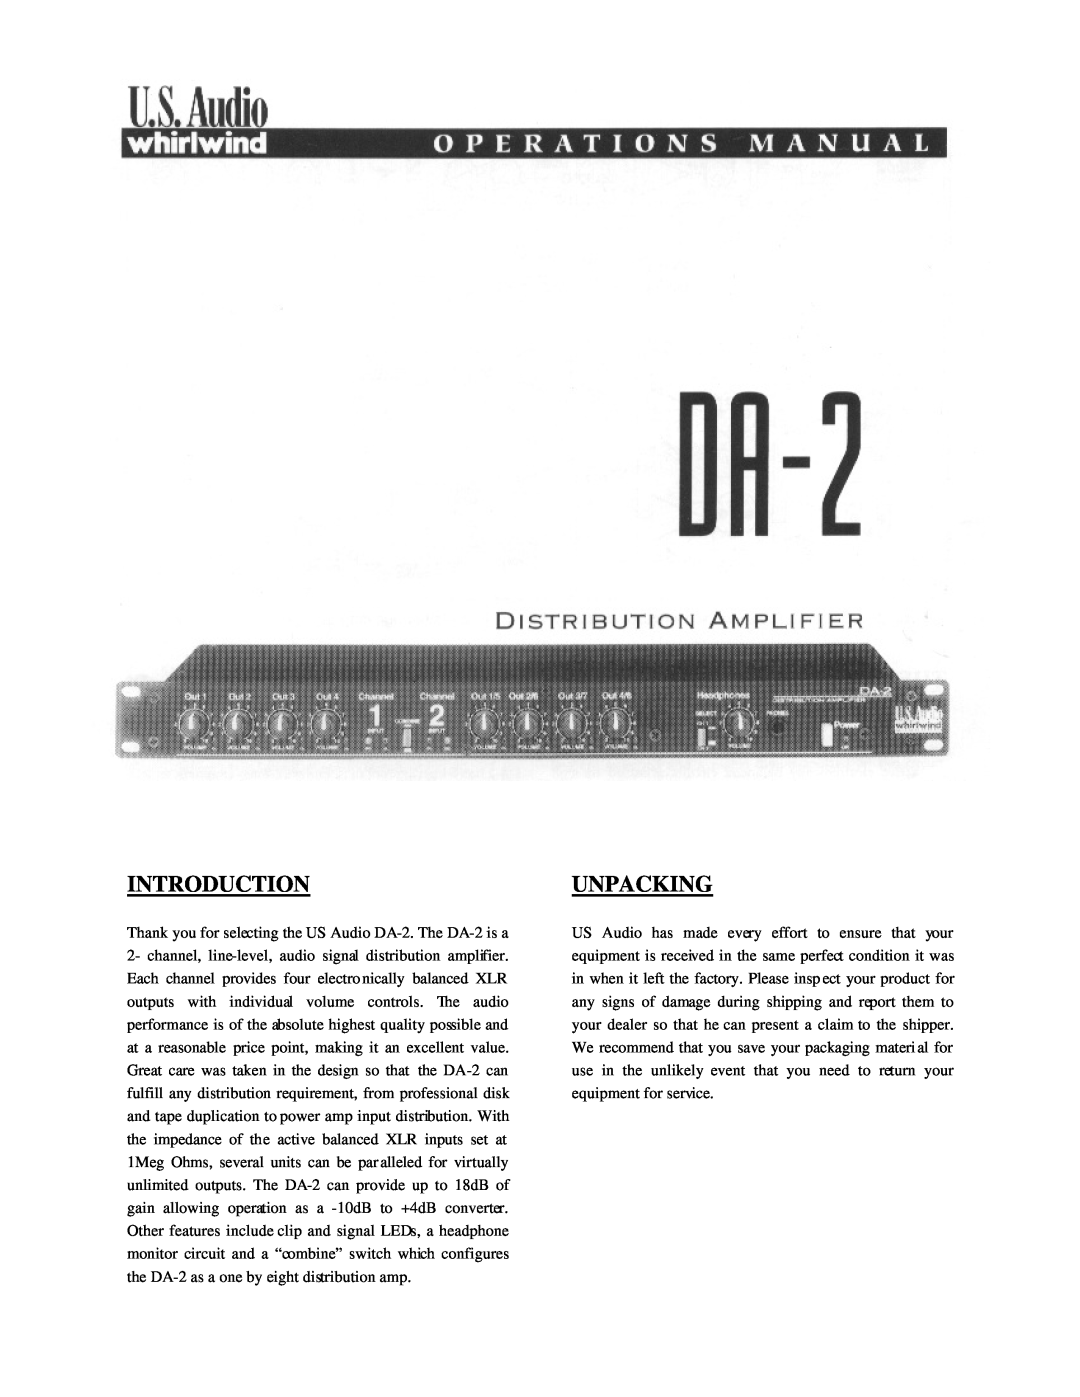 Whirlwind DA-2 manual Introduction, Unpacking 